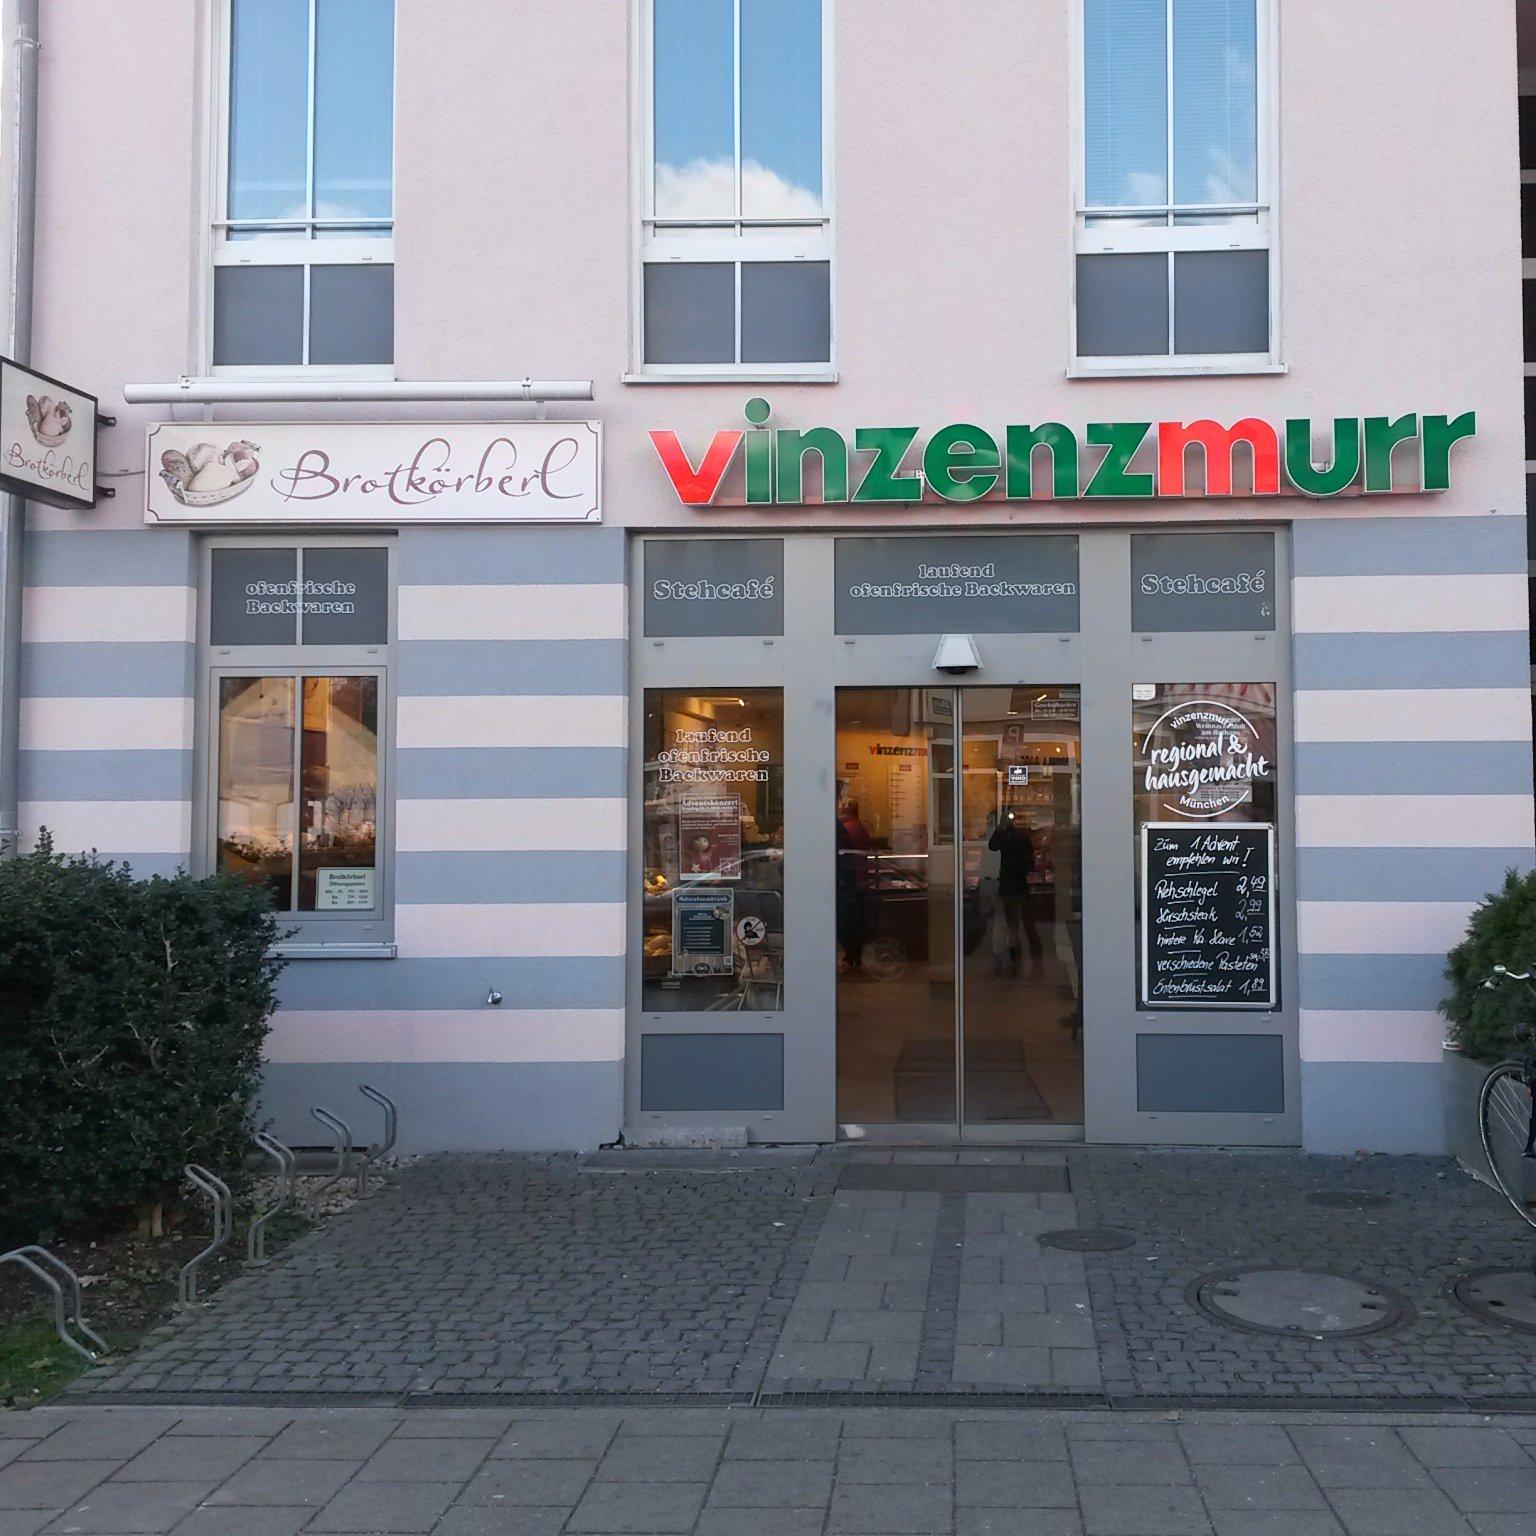 Restaurant "Vinzenzmurr Metzgerei -" in Neubiberg